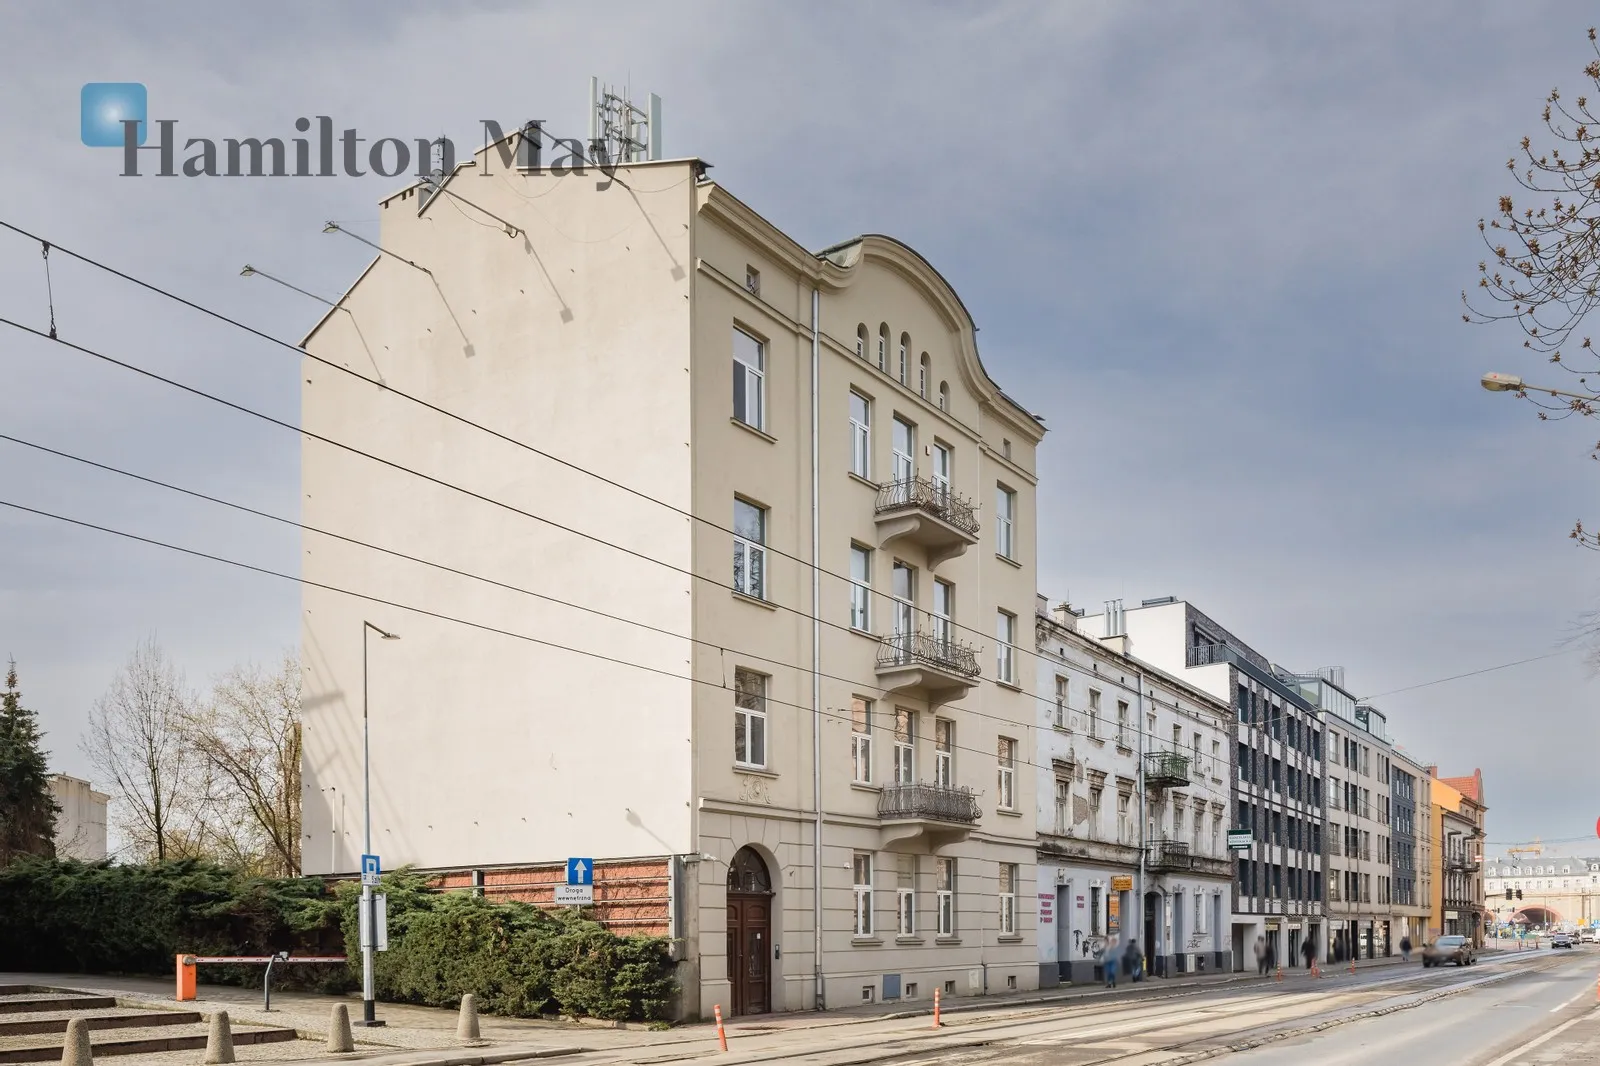 For sale 4-bedroom, spacious apartment near the center on street Grzegórzecka. - slider